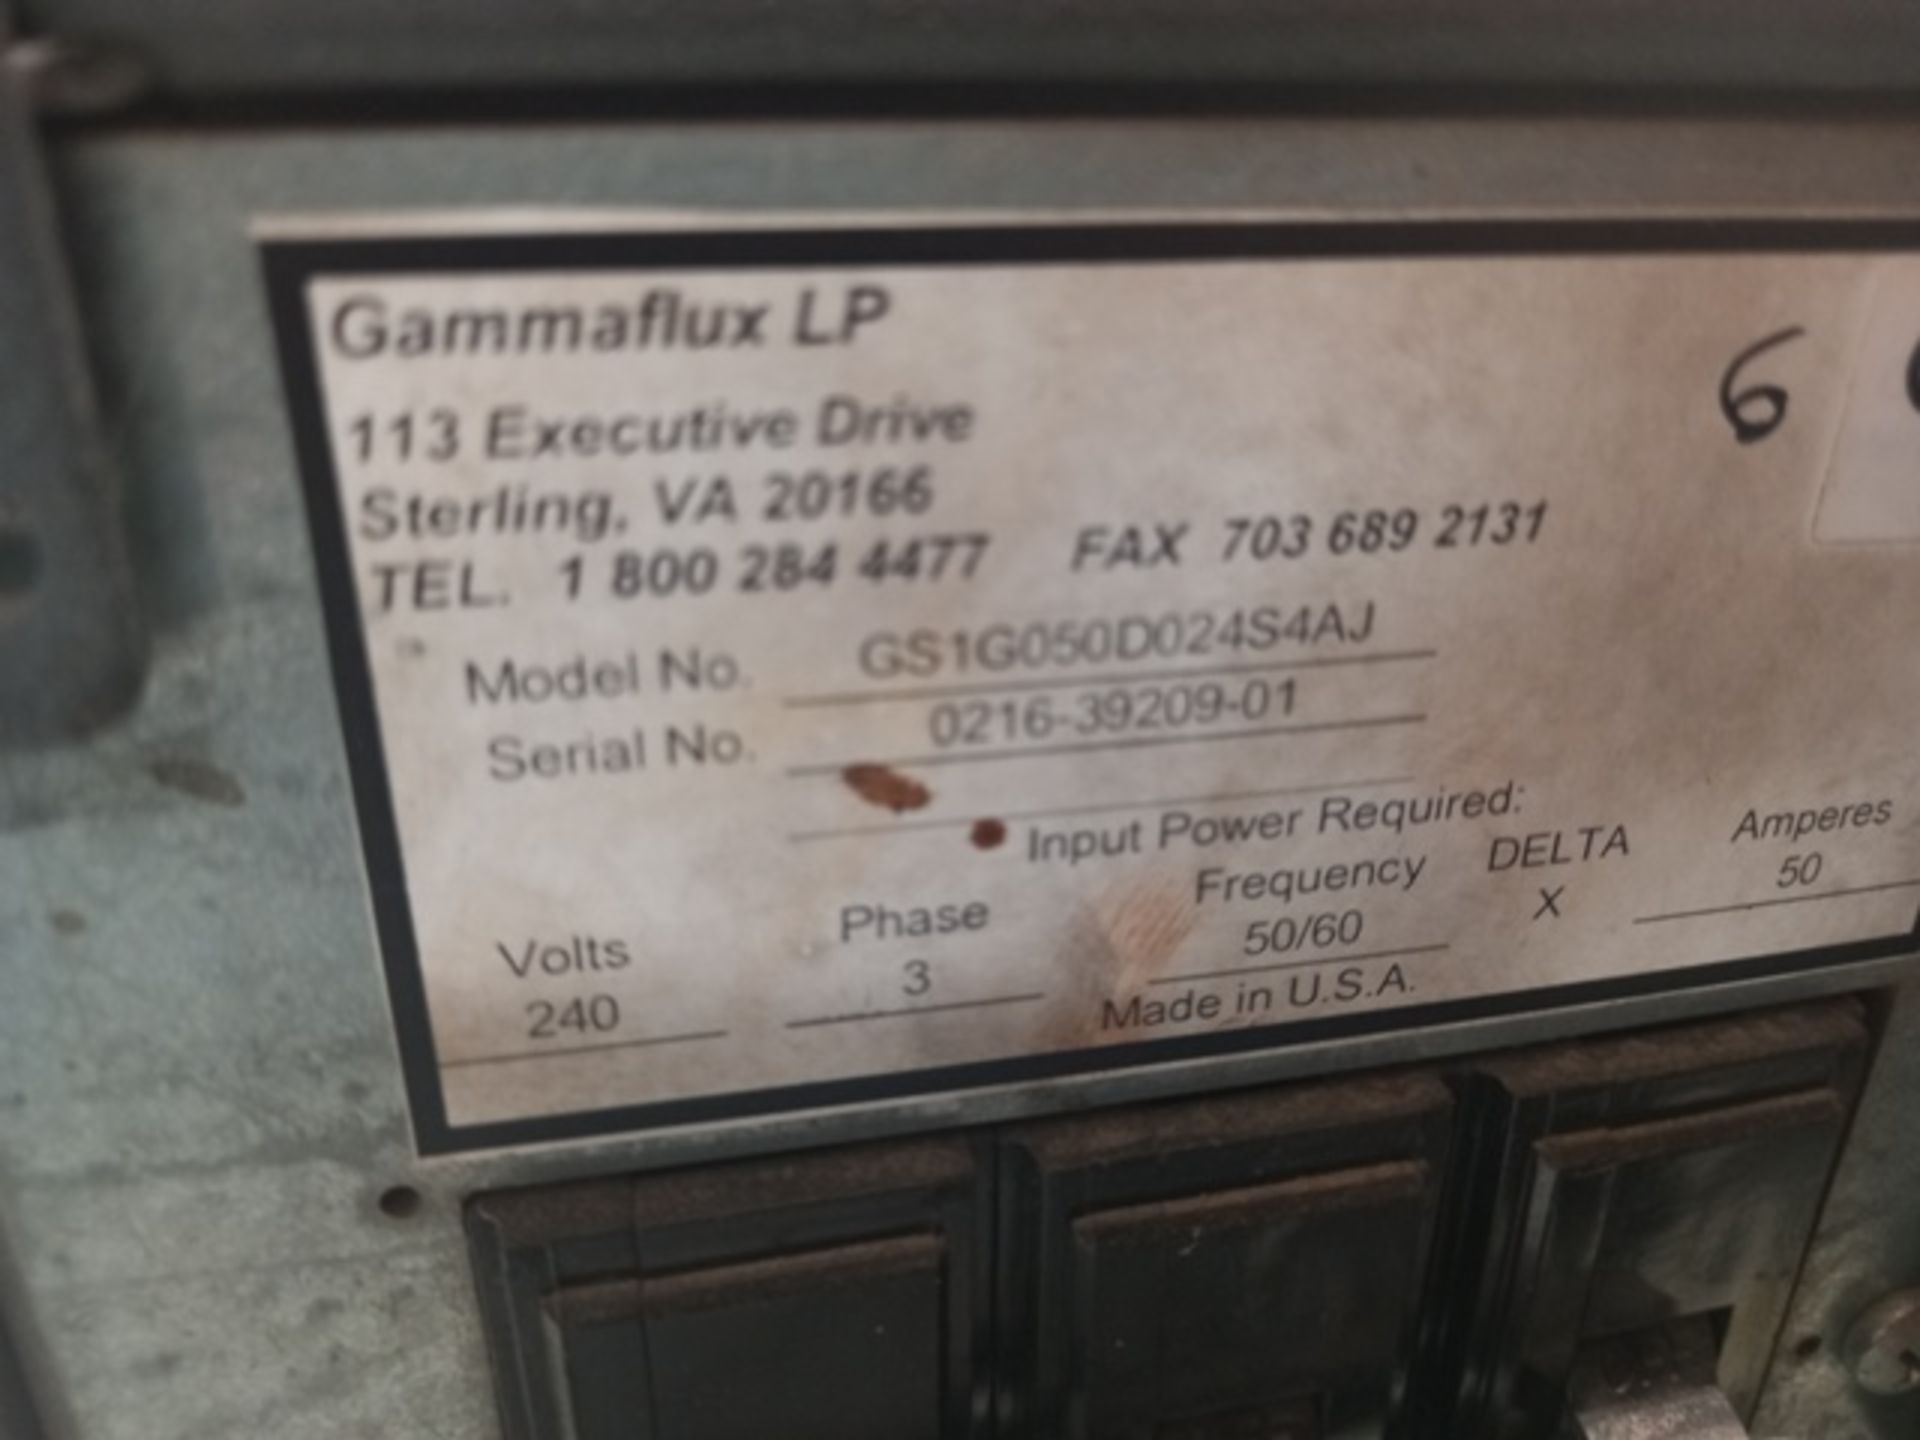 Gammaflux GS1G050D024S4AJ 12 Zones Mold Temperature Controller - Image 5 of 6